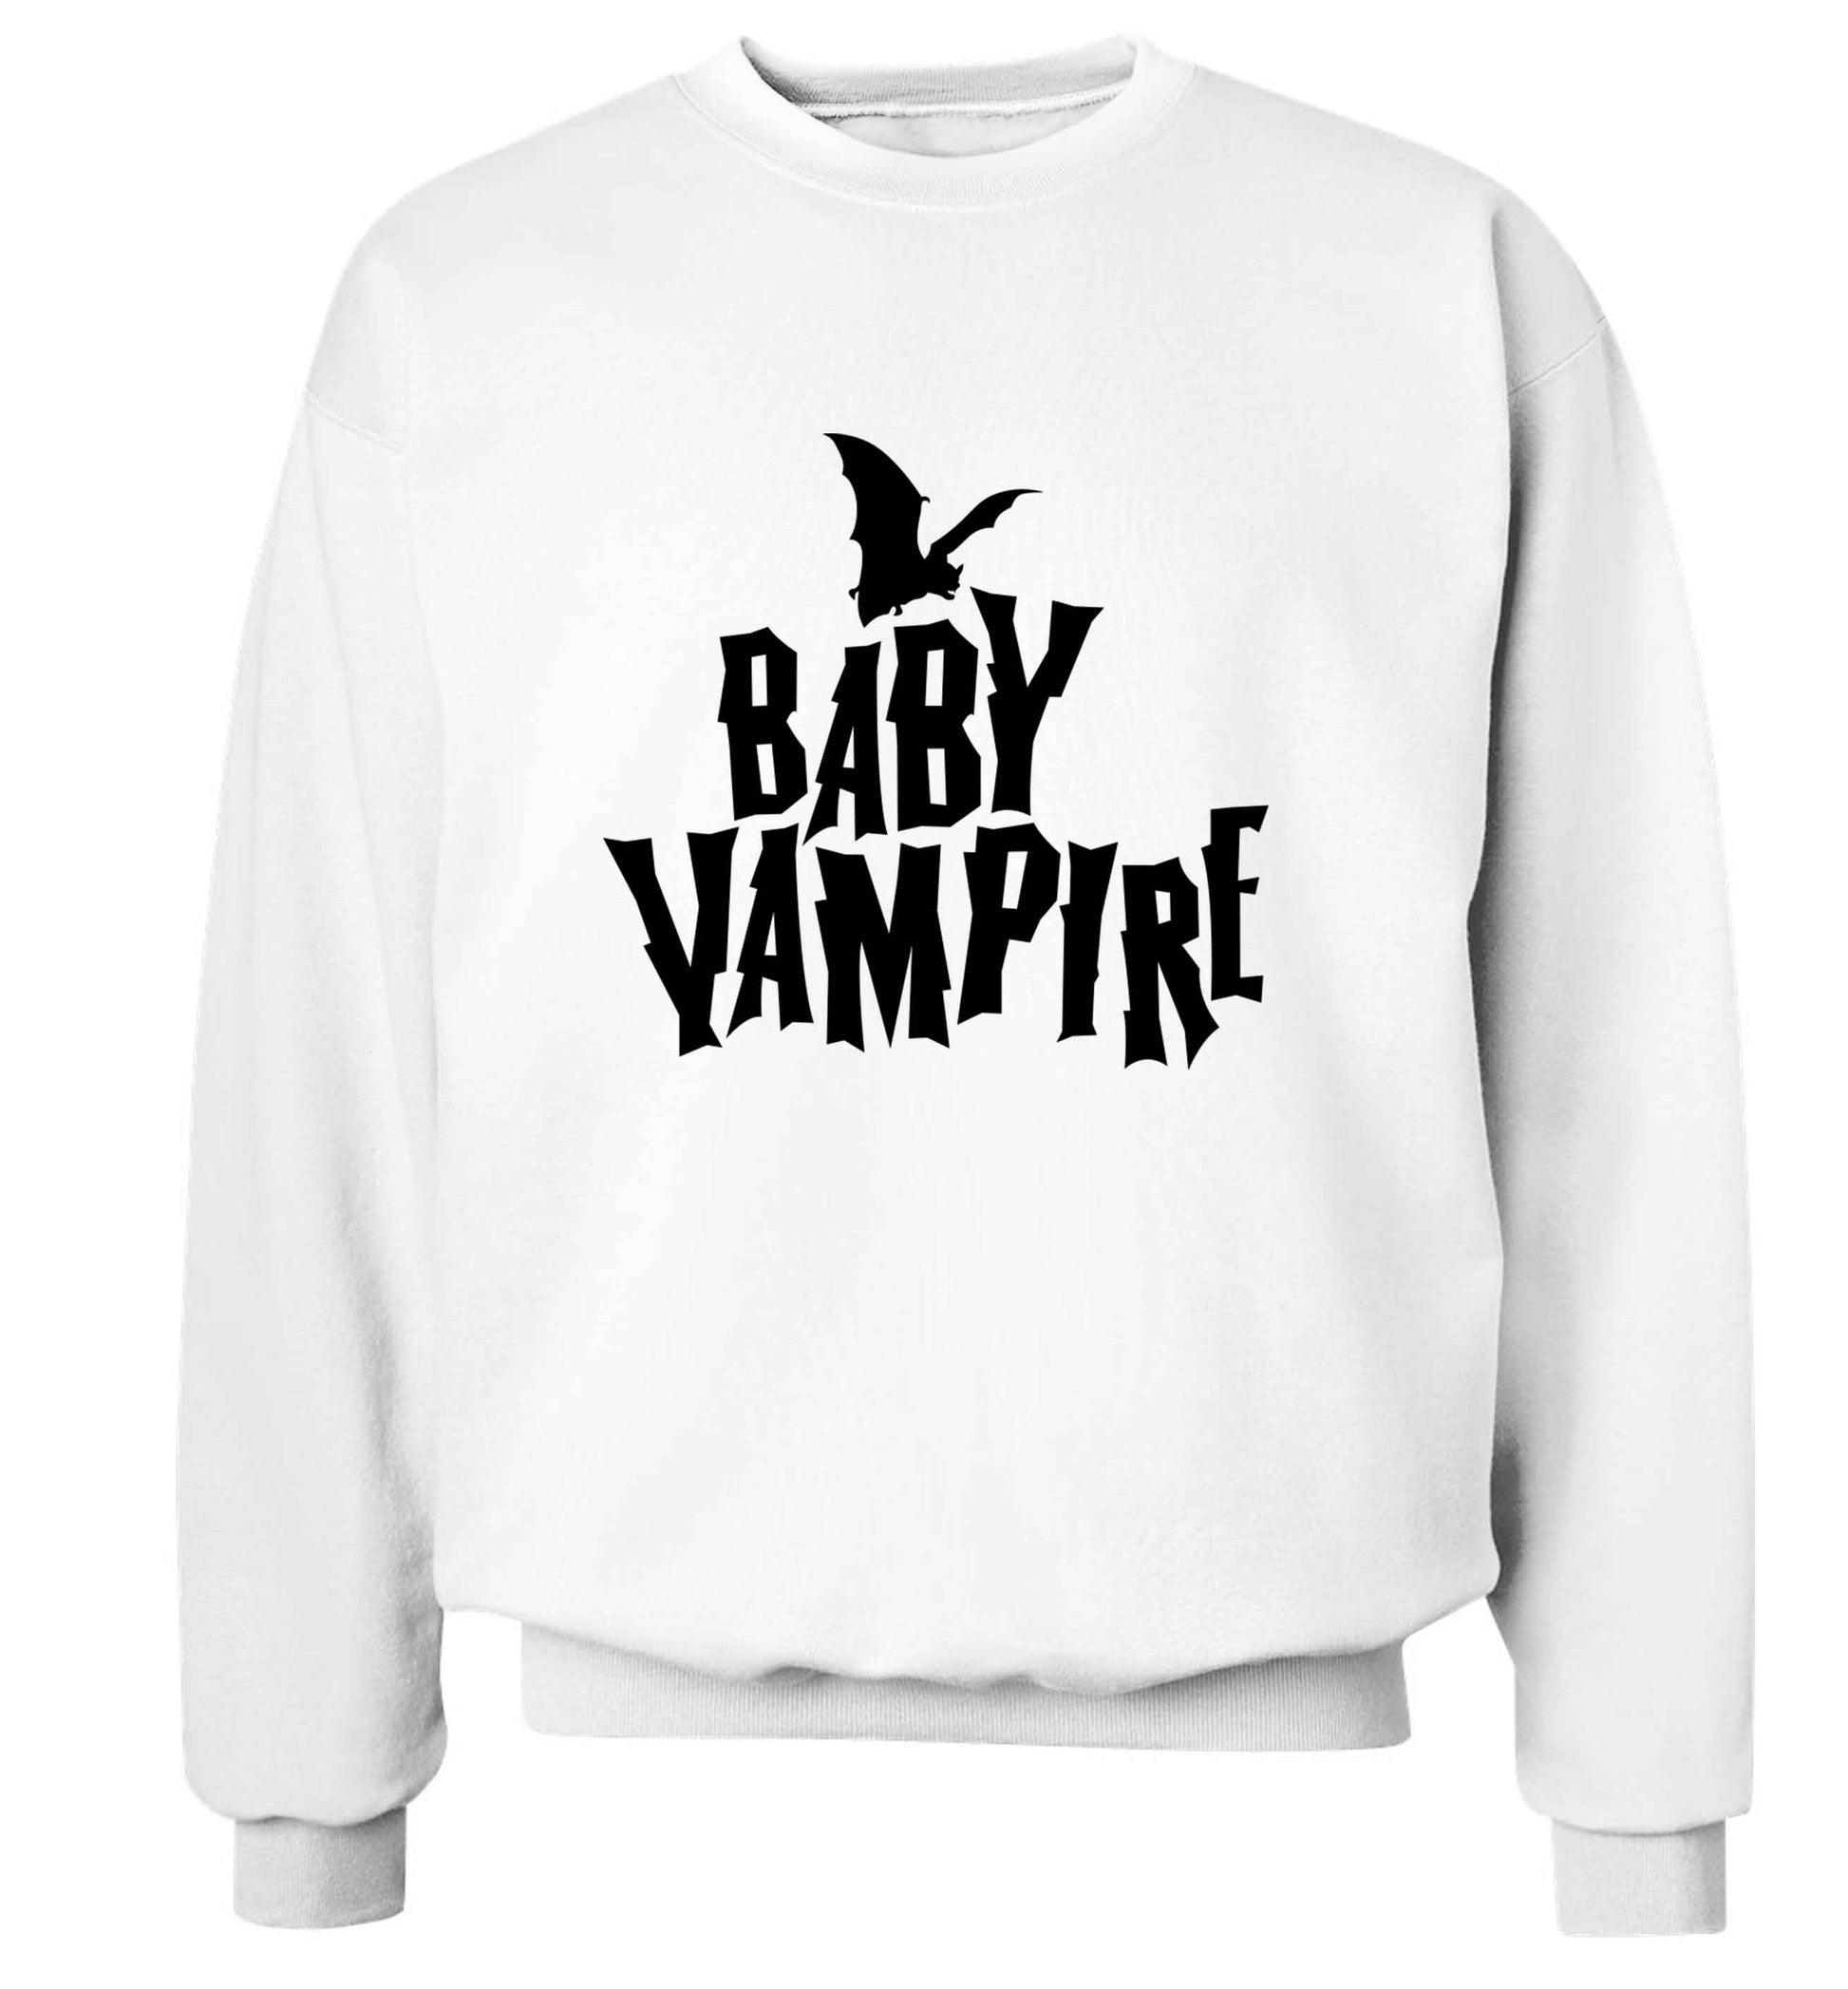 Baby vampire adult's unisex white sweater 2XL